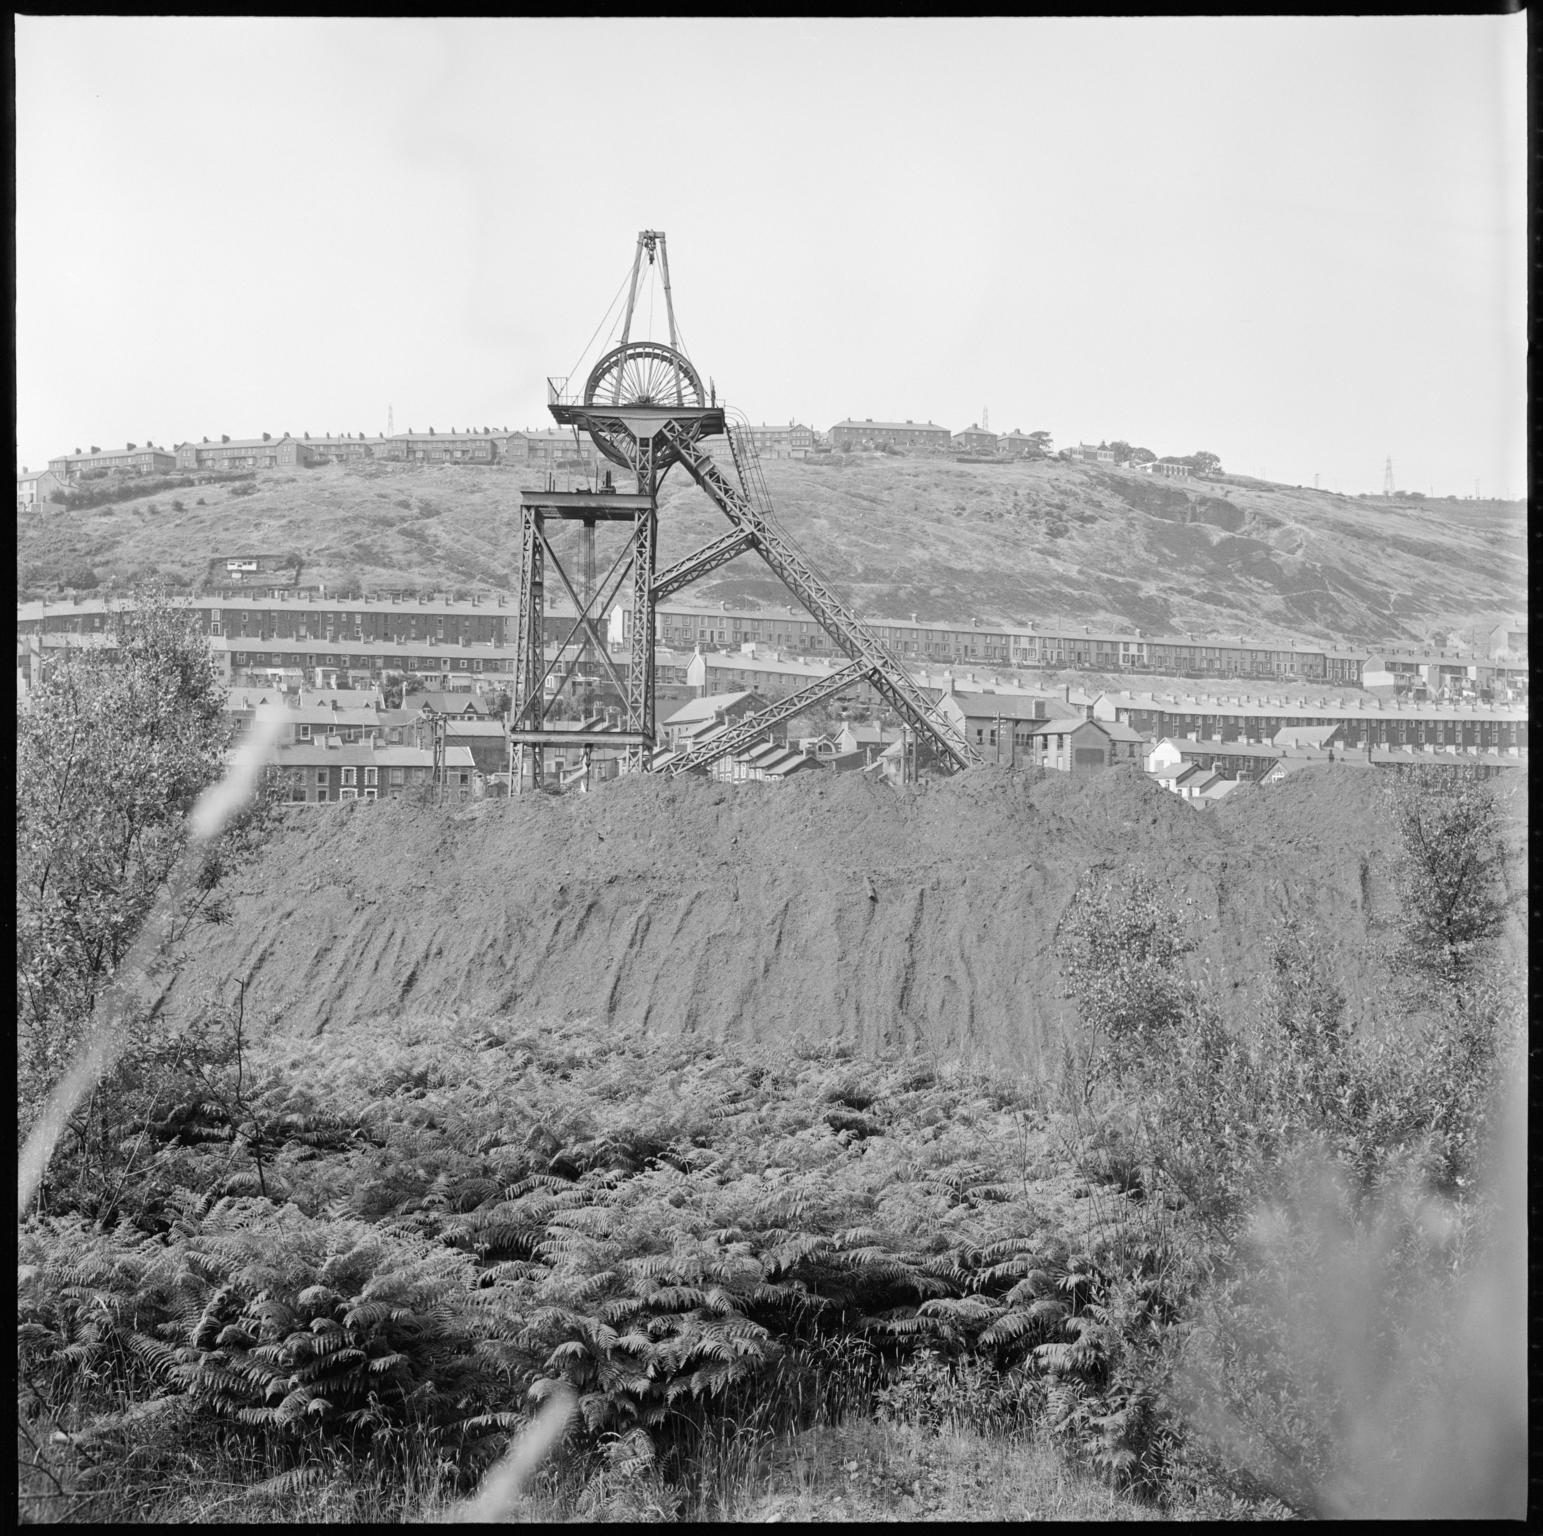 Cwmcynon Colliery, film negative